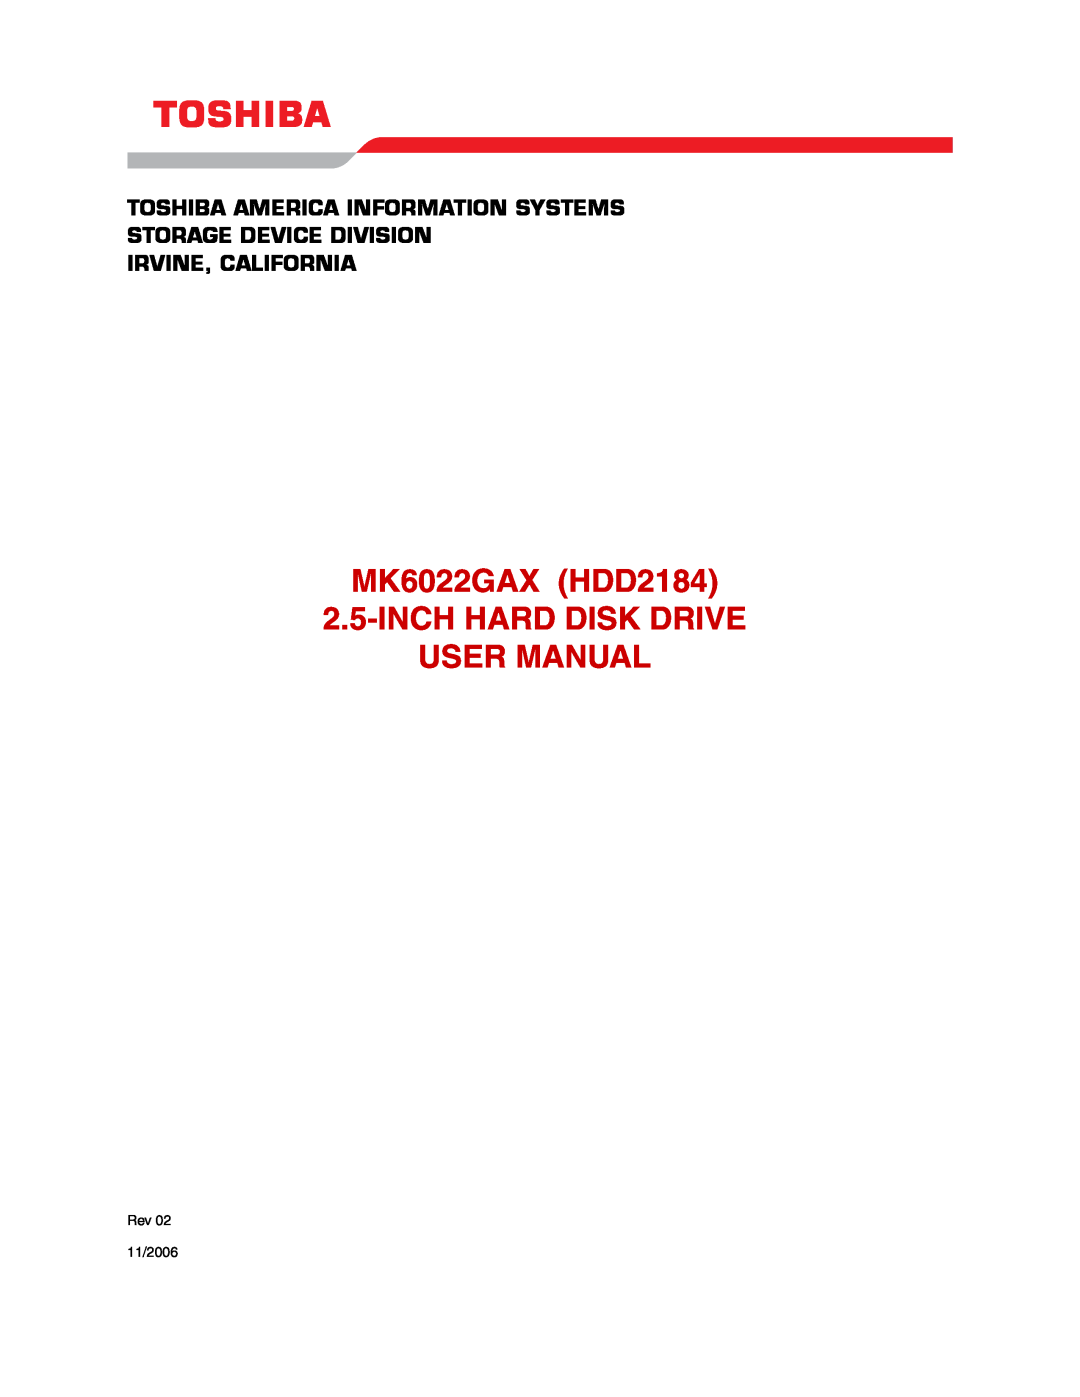 Toshiba user manual MK6022GAX HDD2184 2.5-INCH HARD DISK DRIVE USER MANUAL, Irvine, California, Rev 11/2006 